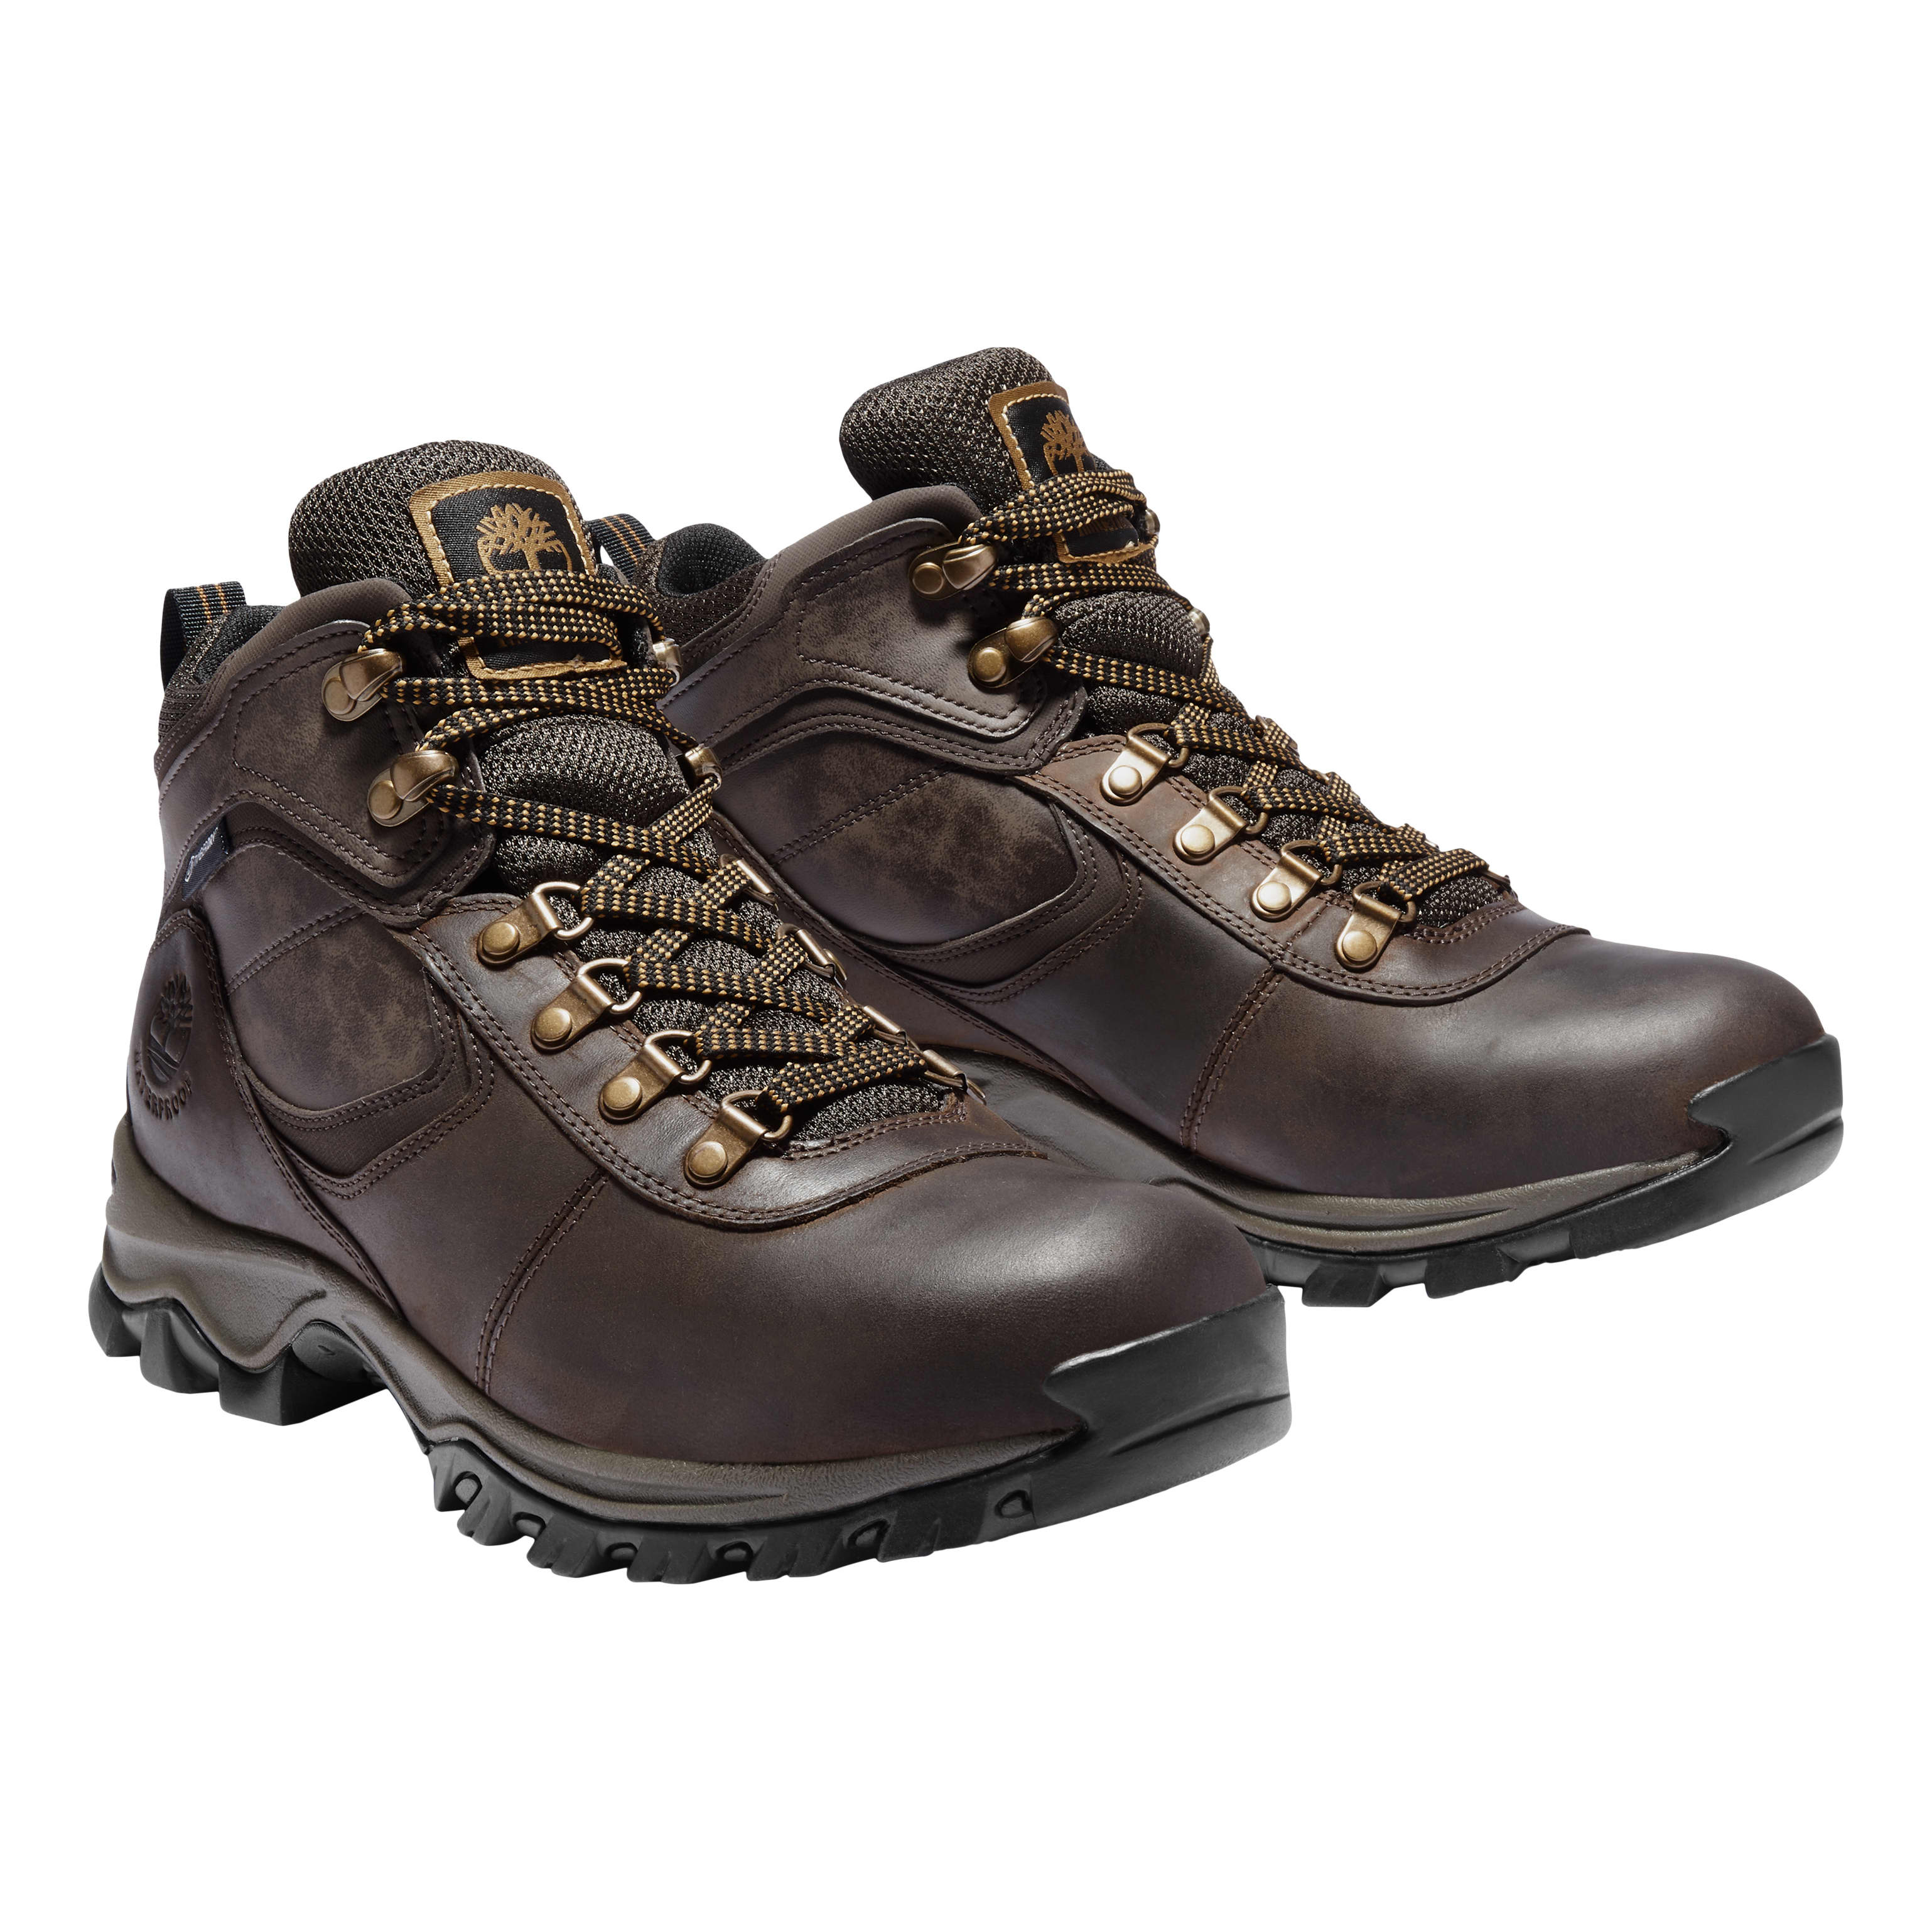 Men's Targhee II Mid Waterproof Hiking Boots | Black Olive/Yellow